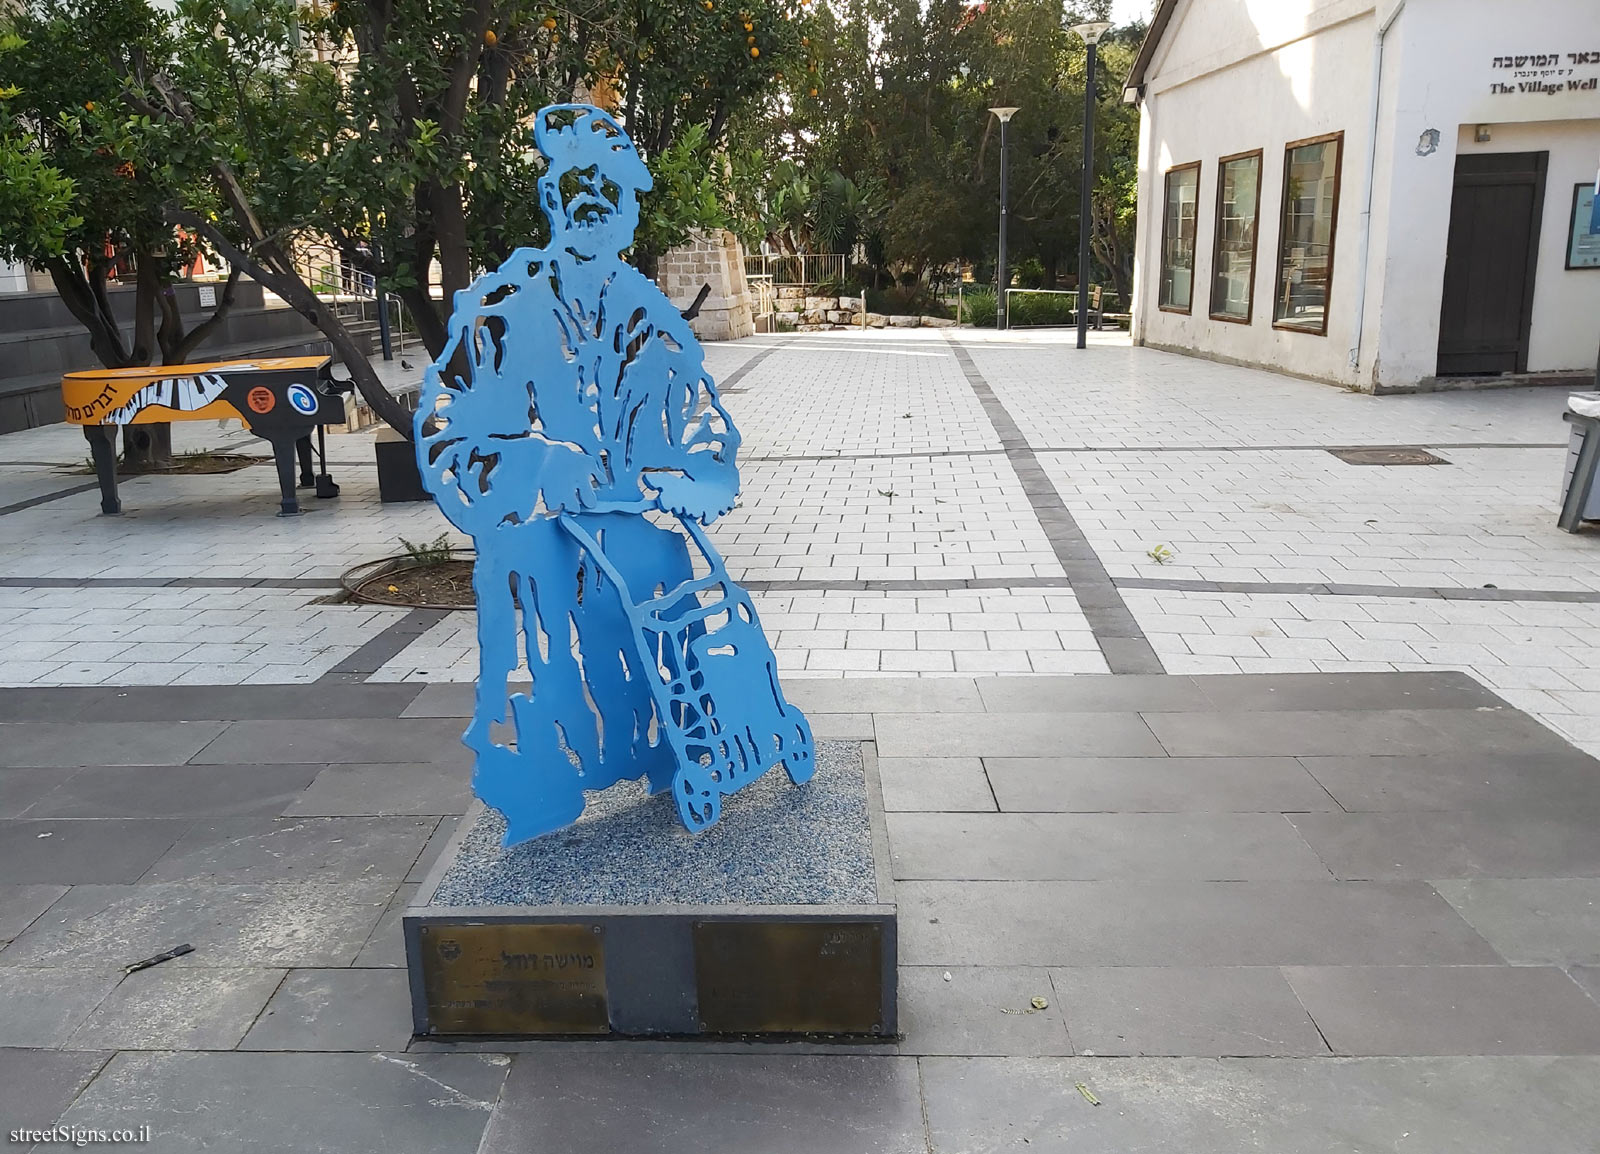 Rishon LeZion - "Moishe Dudel" - an outdoor sculpture by Arie Lamdan - Zadal St 7-5, Rishon LeTsiyon, Israel